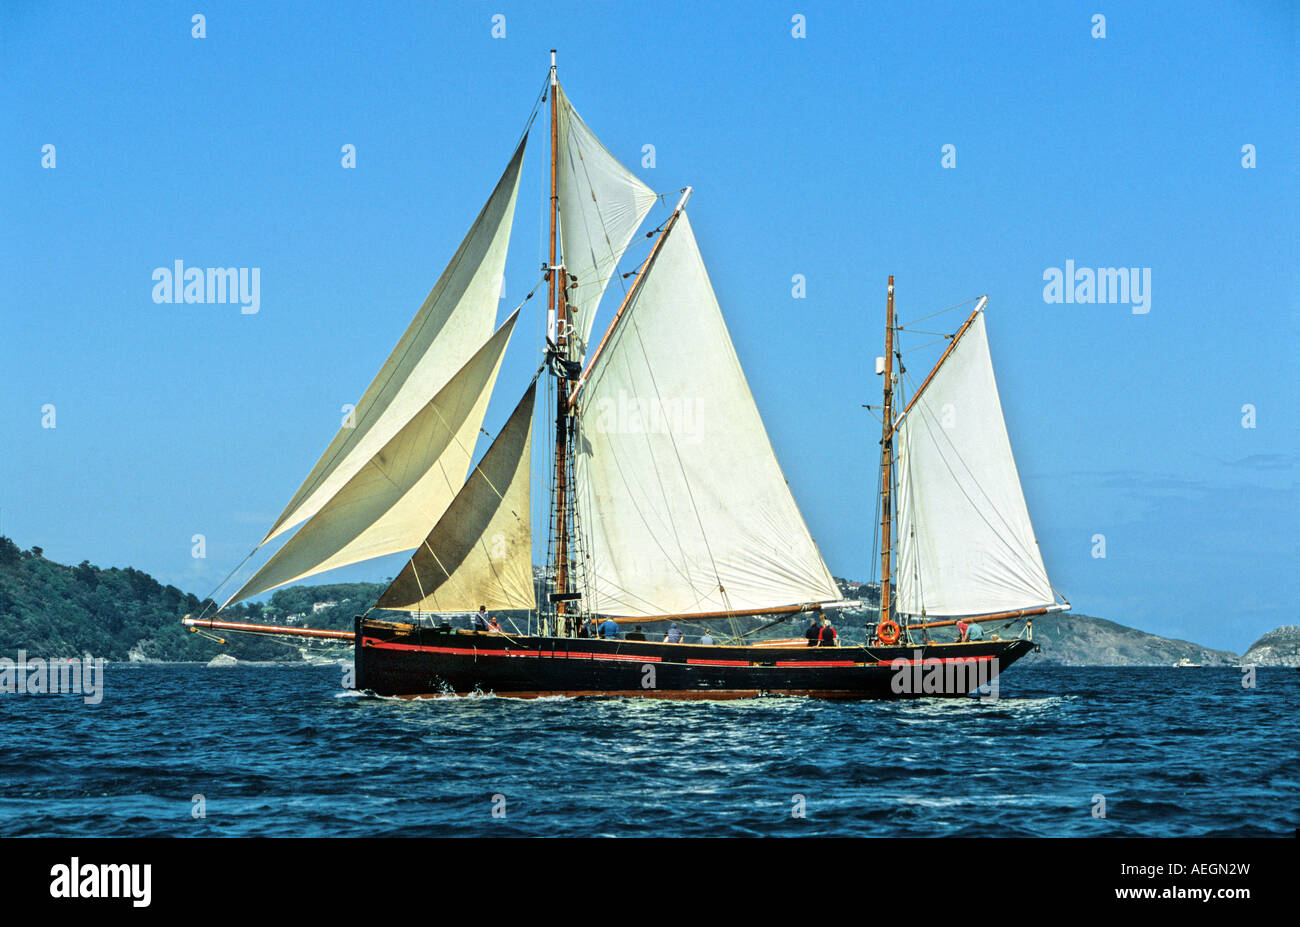 Leader Brixham Sailing Trawler High Resolution Stock Photography and ...